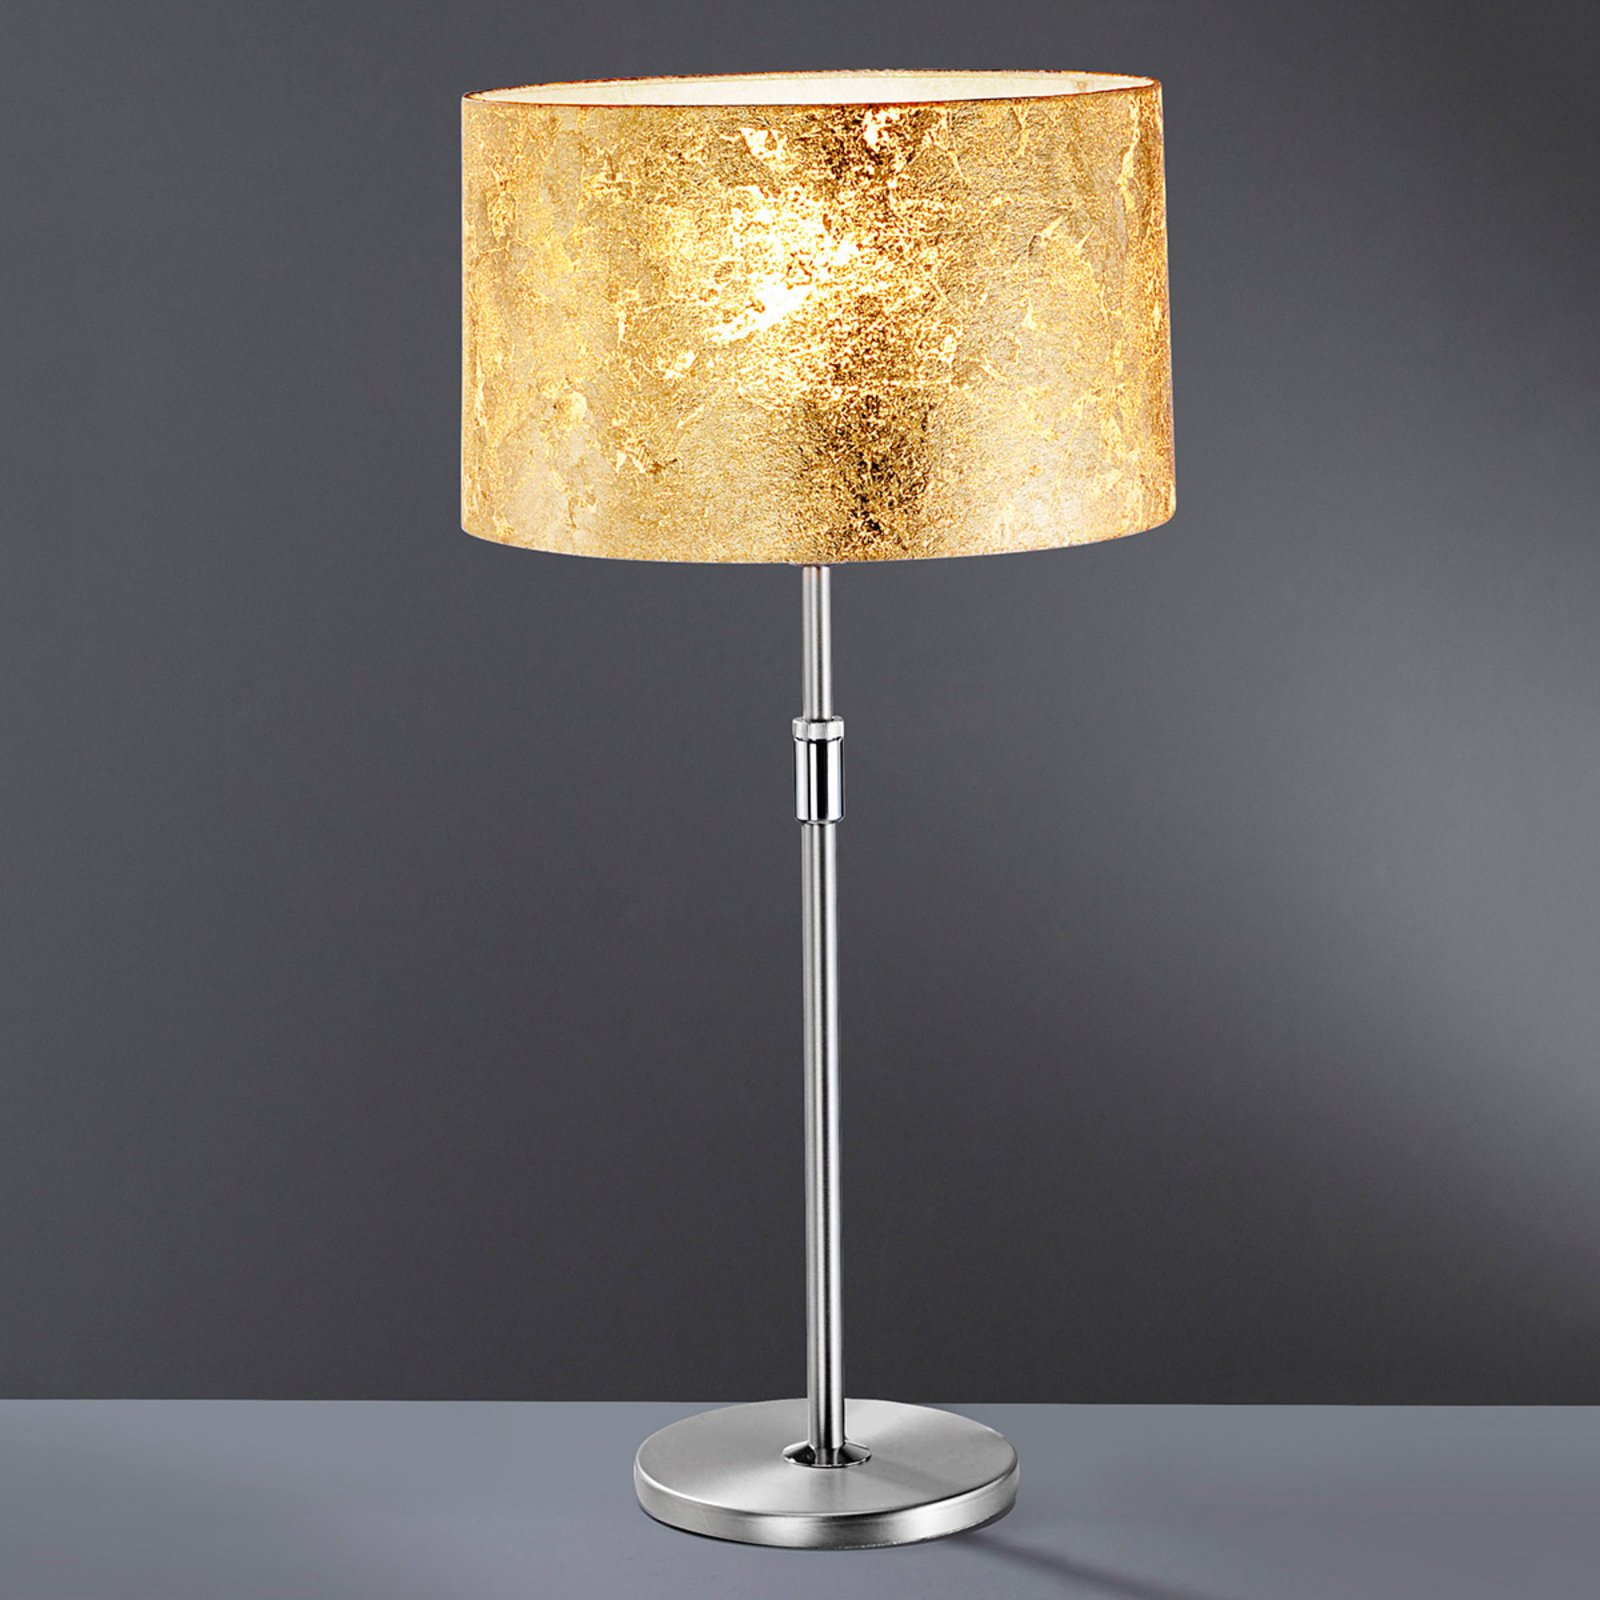 Alea Loop table lamp with gold leaf coating